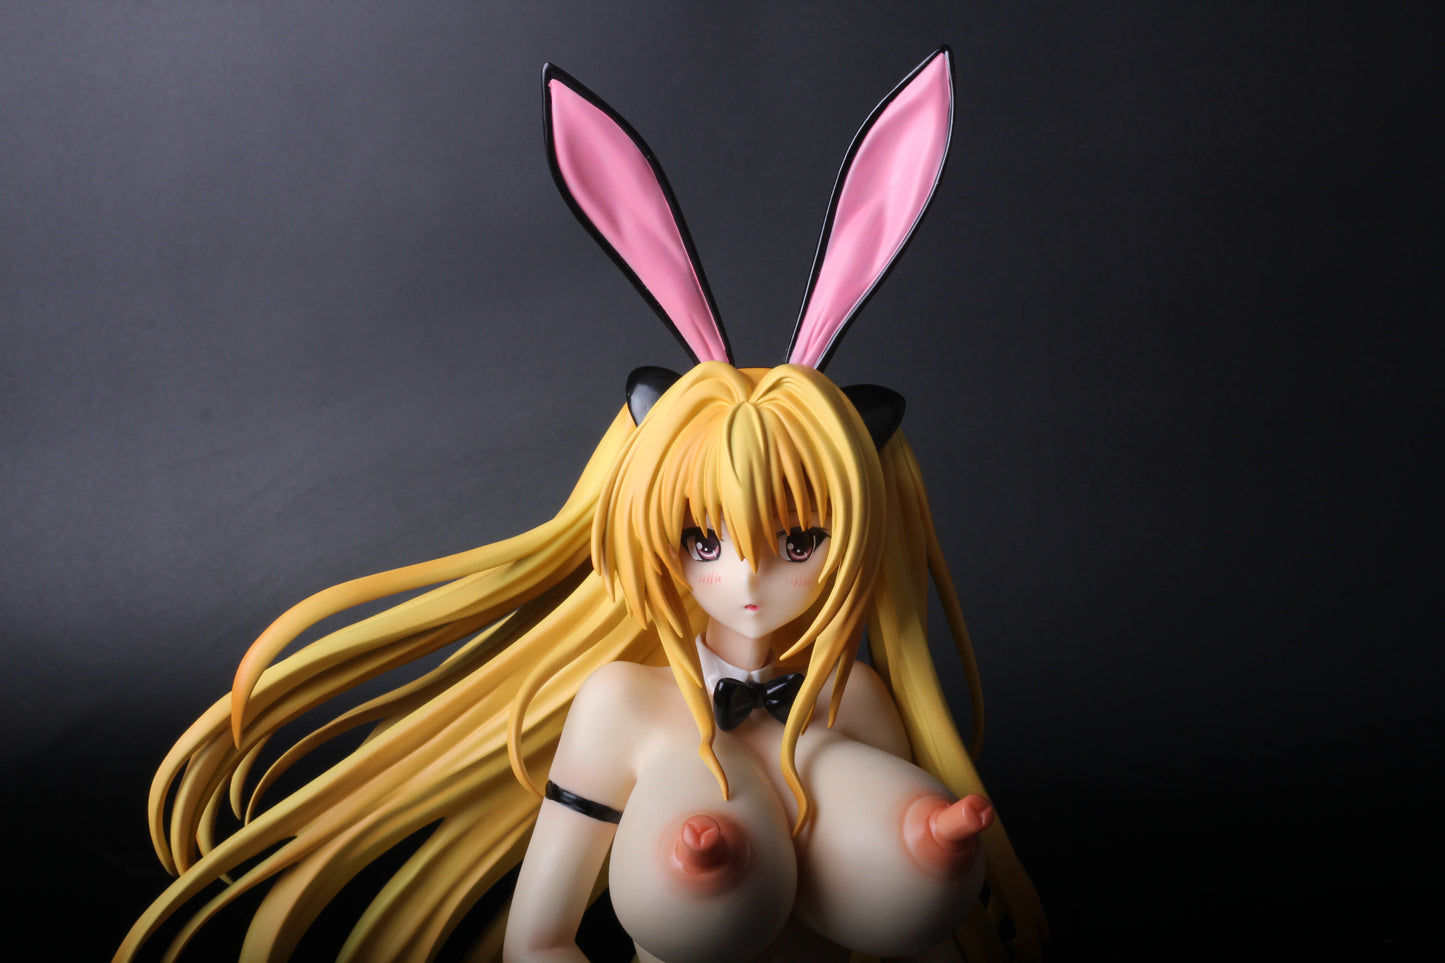 To Love Darkness Golden Darkness Eve Konjiki no Yami Bunny Ver. 1/4 nude anime figure